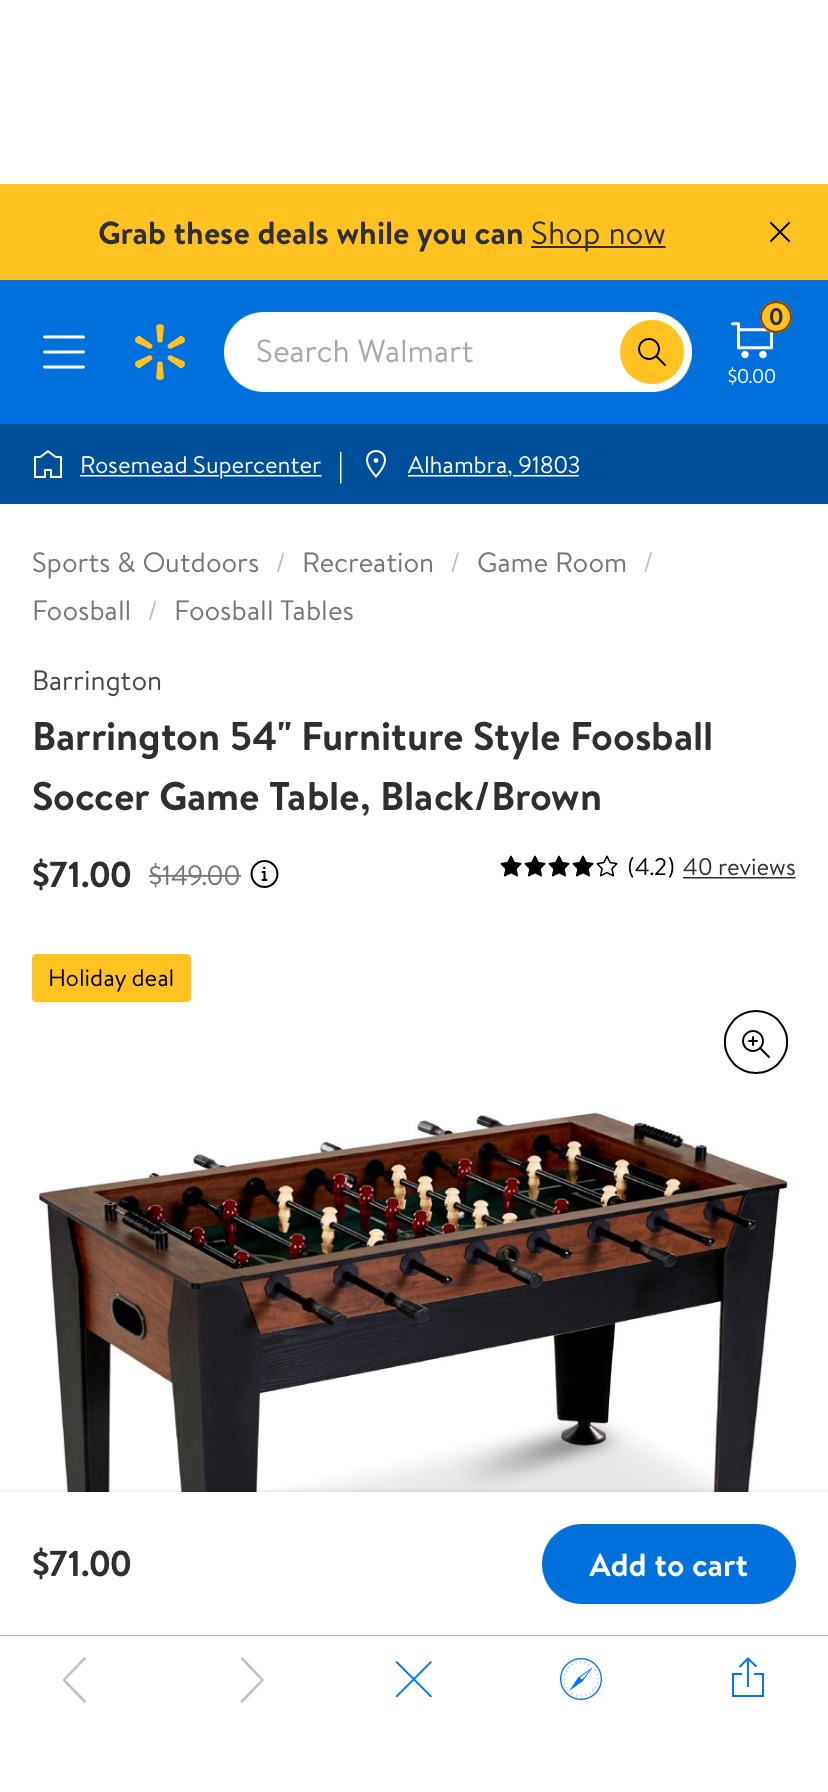 Barrington 54" Furniture Style Foosball Soccer Game Table, Black/Brown - Walmart.com桌上足球